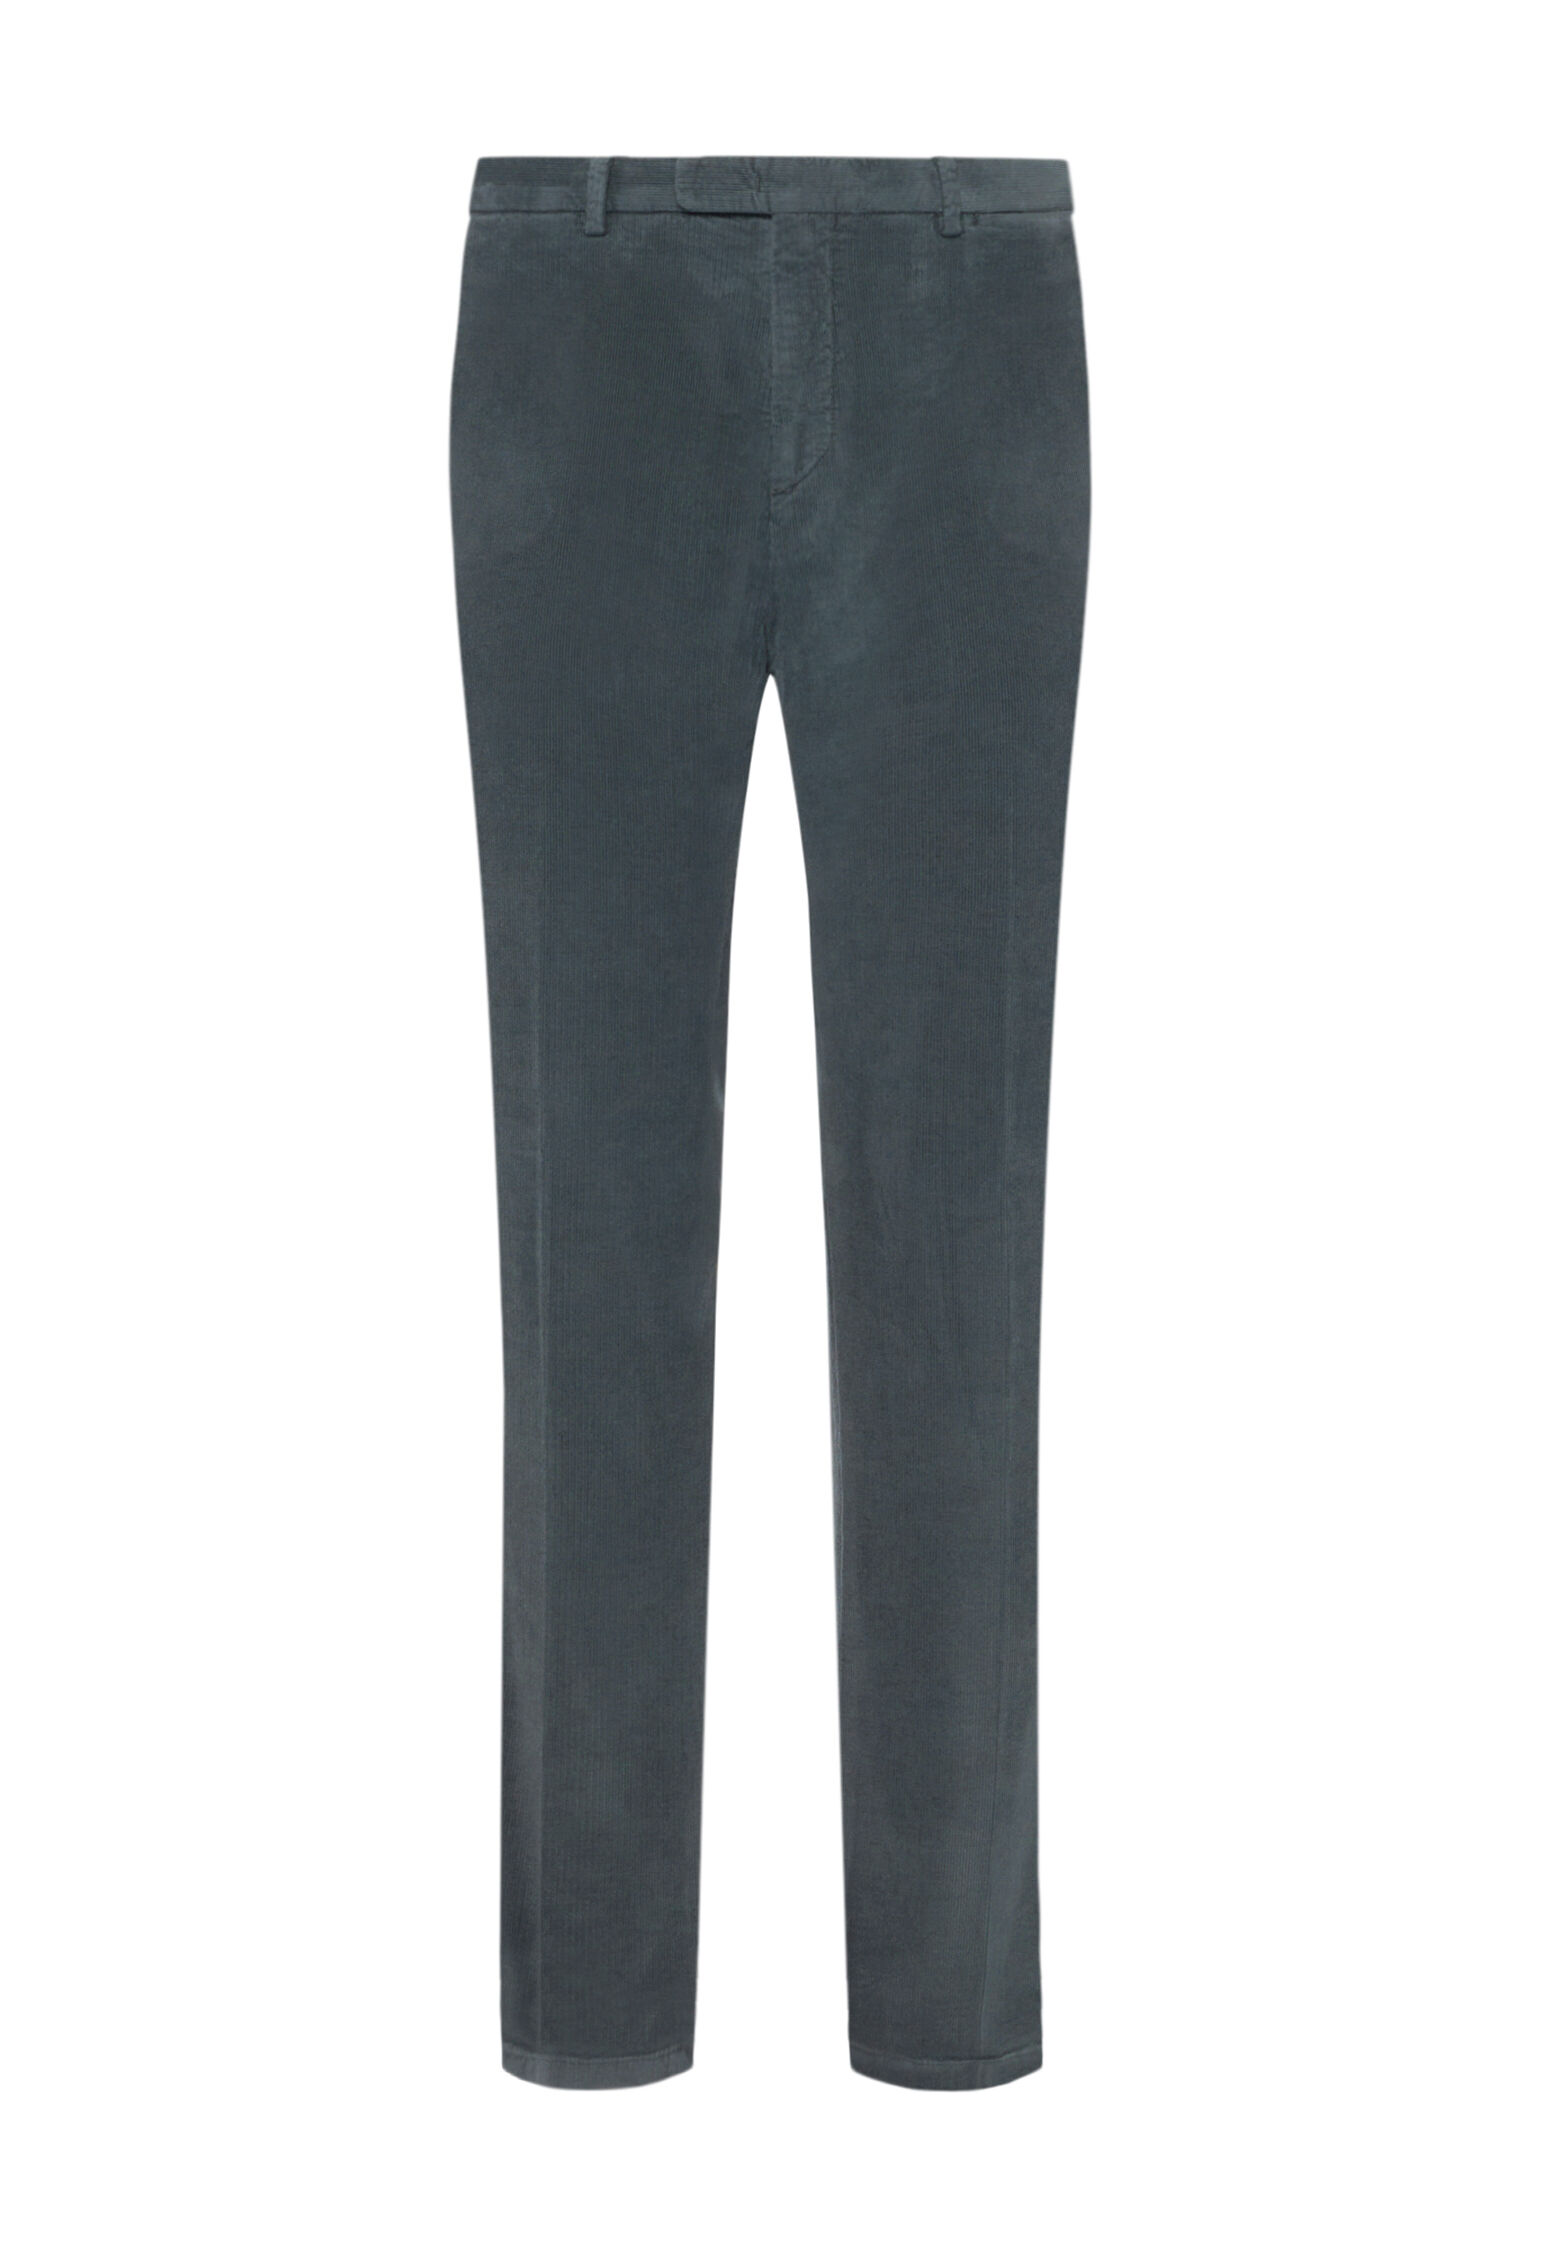 Belvedere Cord Trousers - London Grey | Boden EU